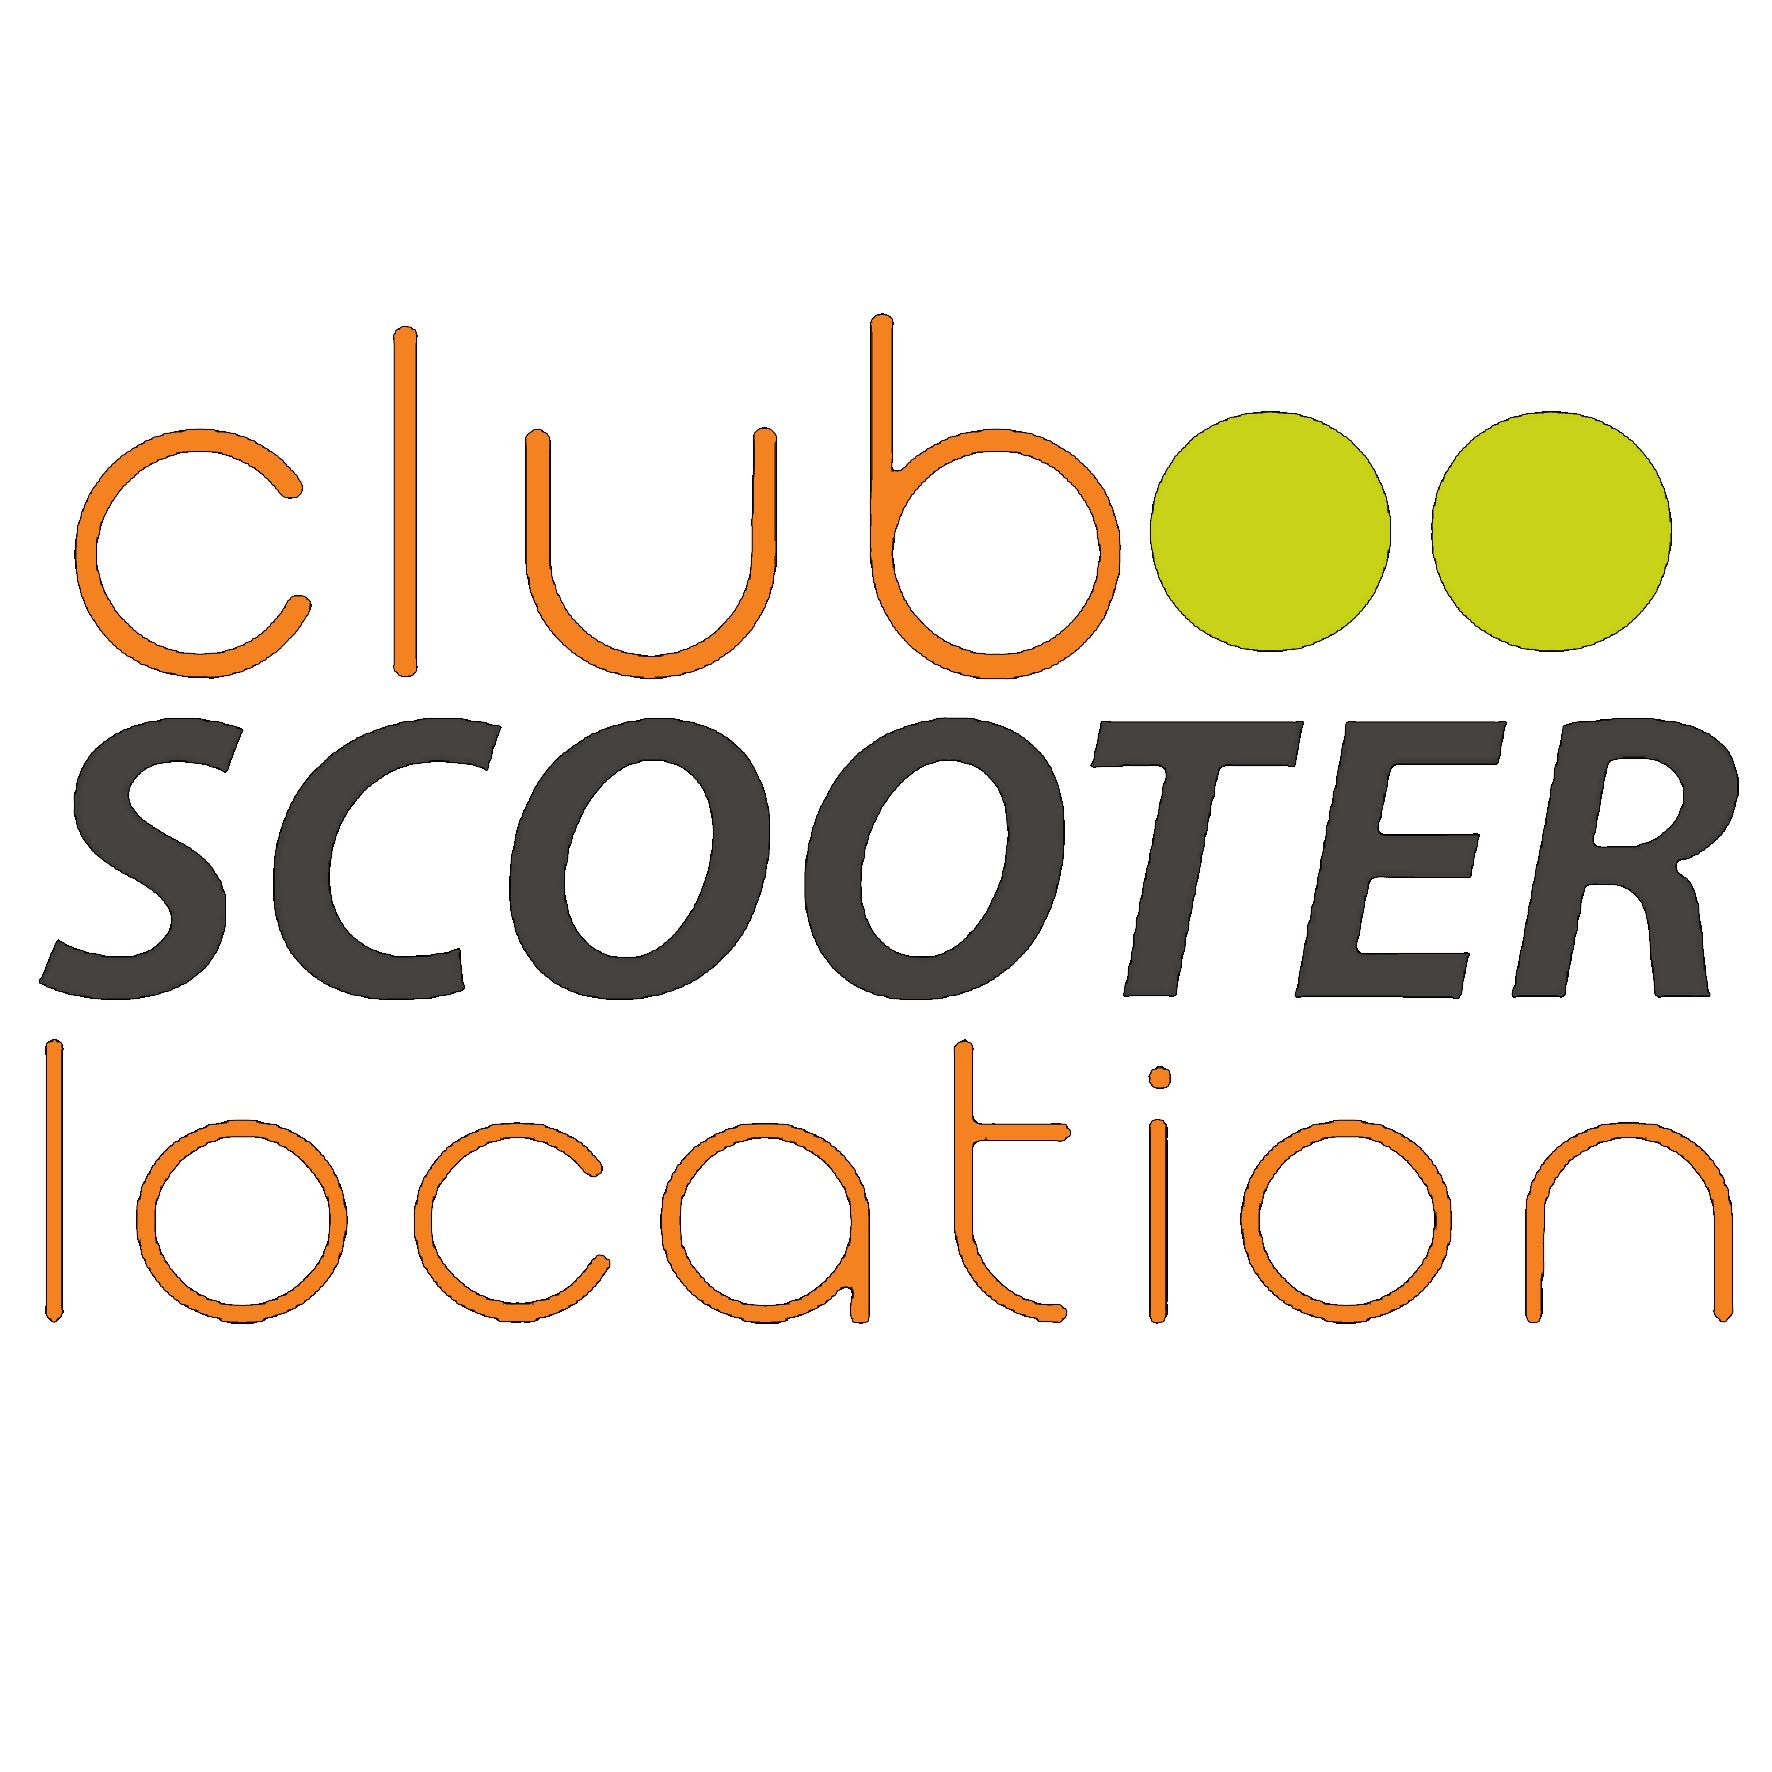 Scooter Rental Paris | Club Scooter